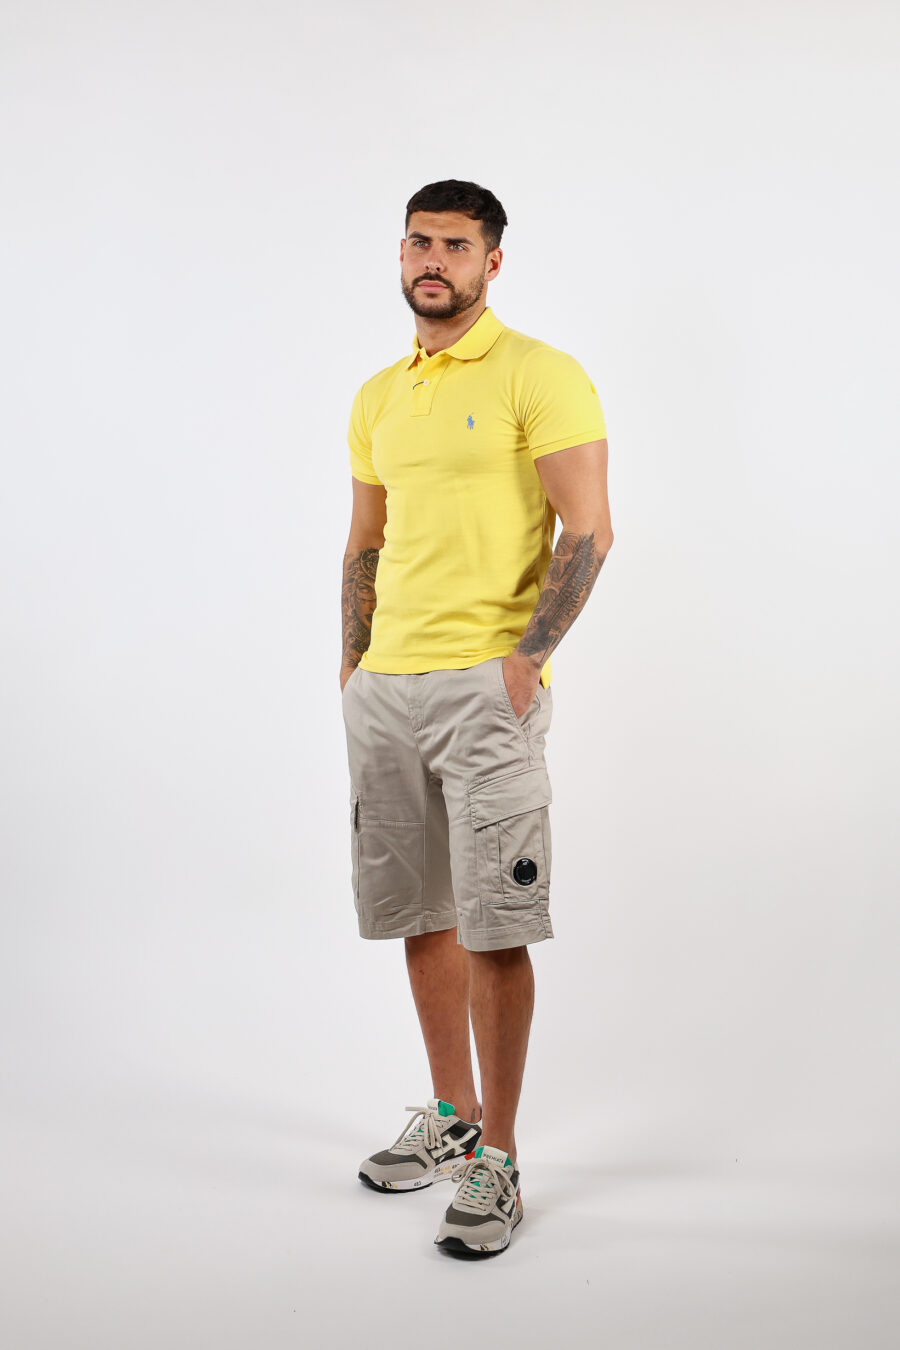 T-shirt amarela e azul com mini-logotipo "polo" - BLS Fashion 193